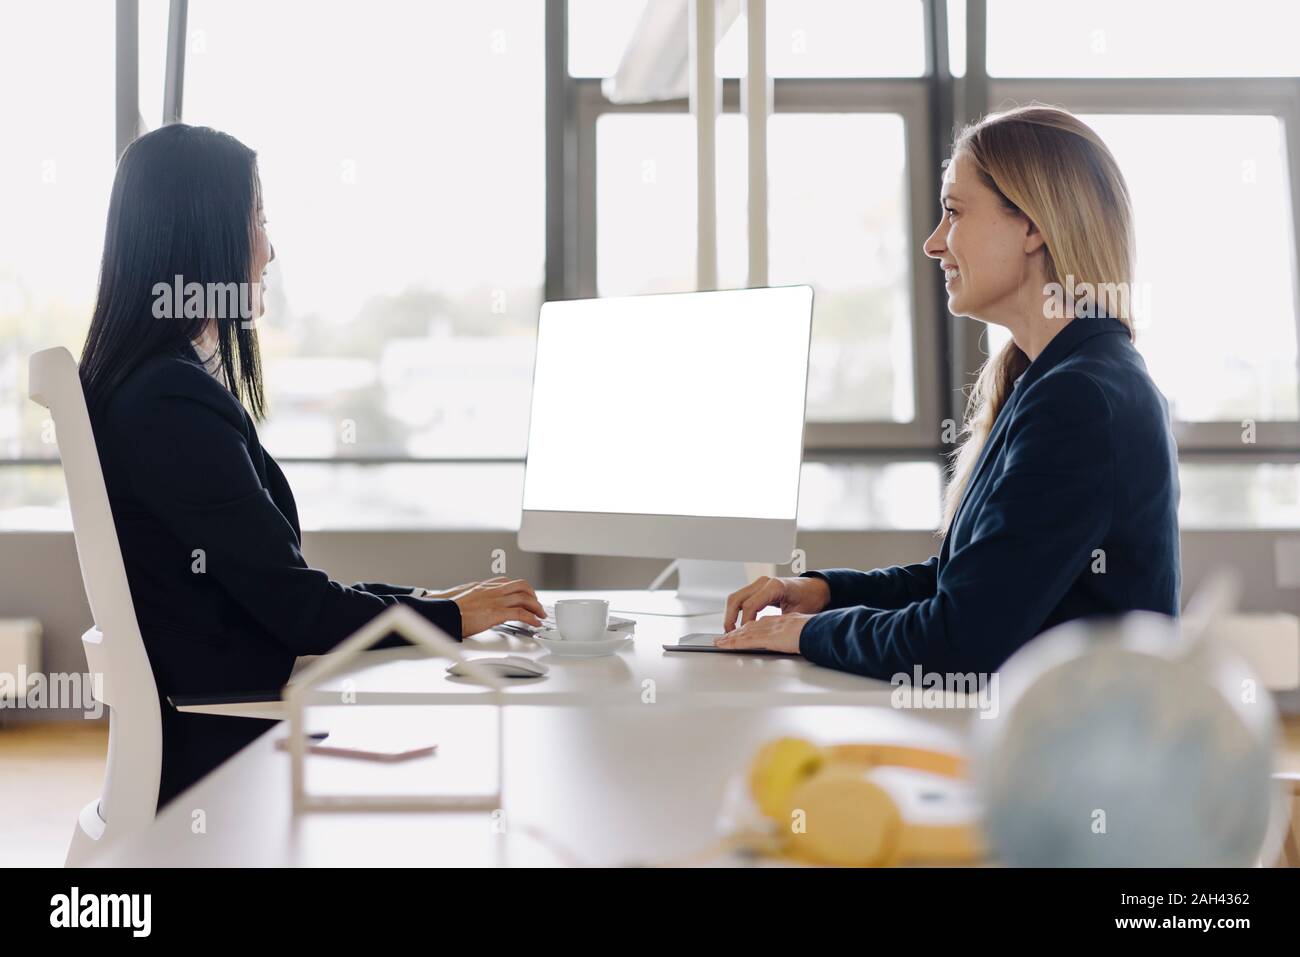 Two businesswomen sitting at desk in office talking Stock Photo